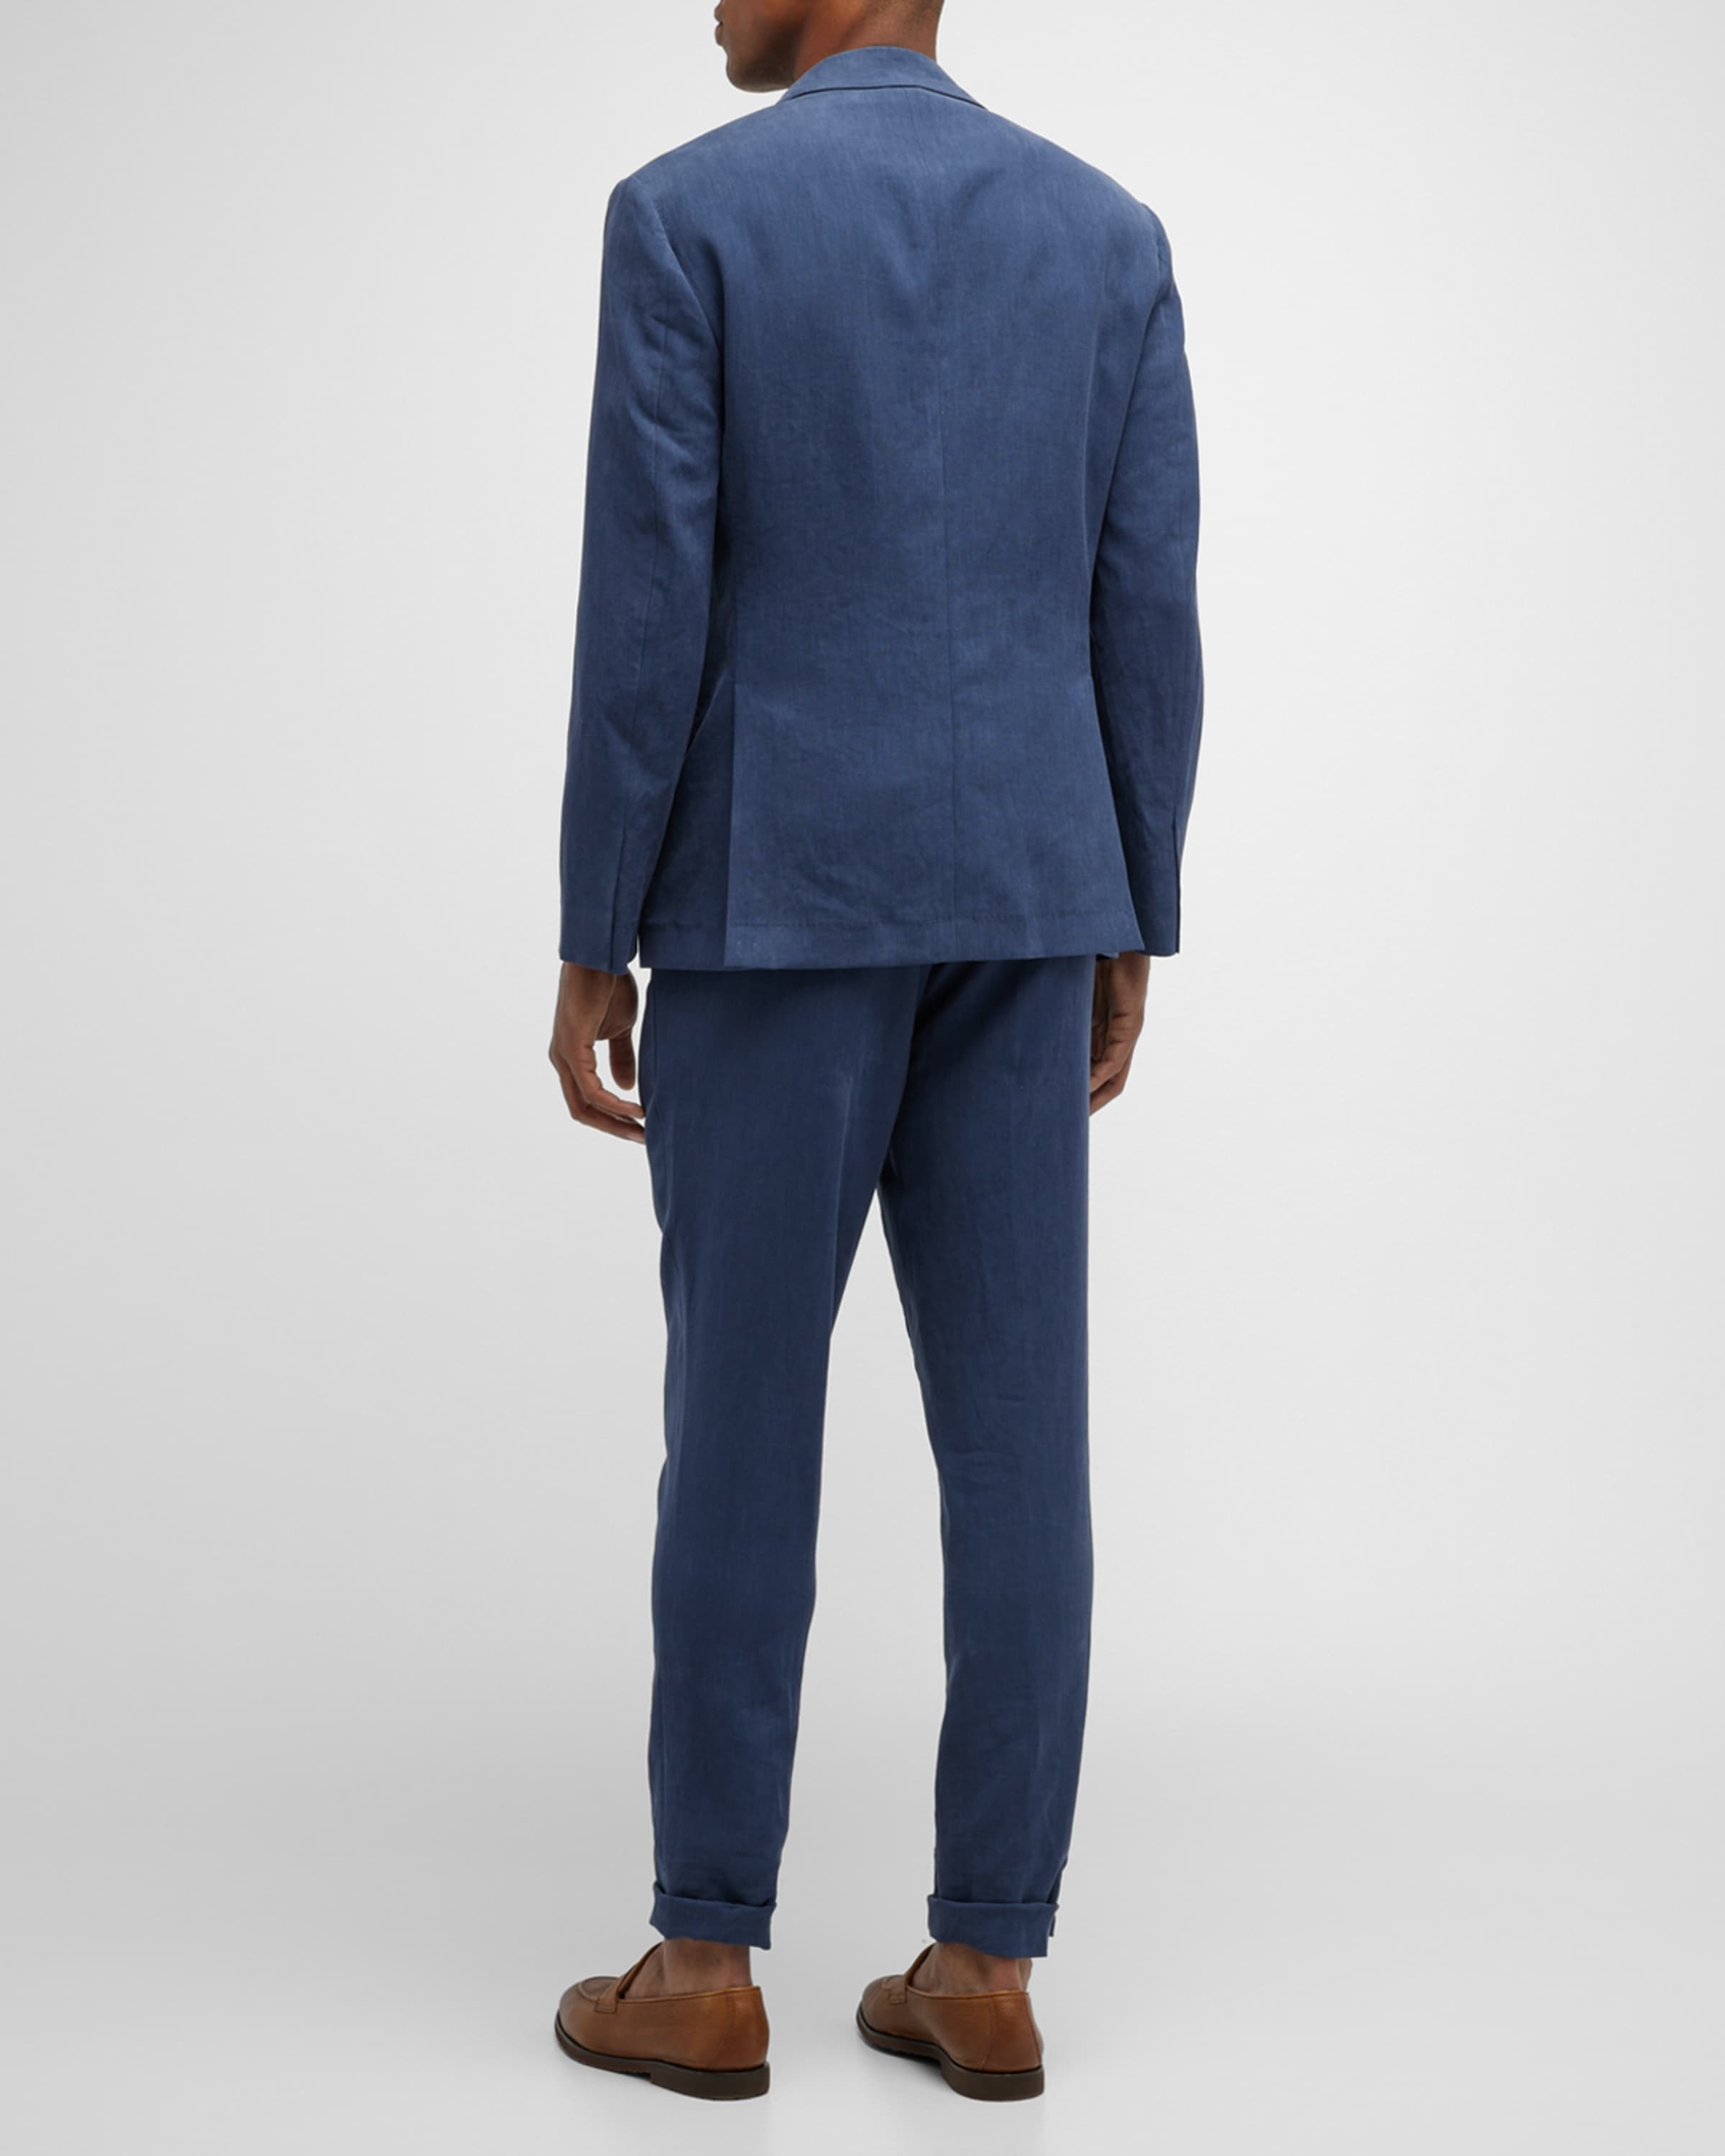 Men's Solid Linen Suit - 4